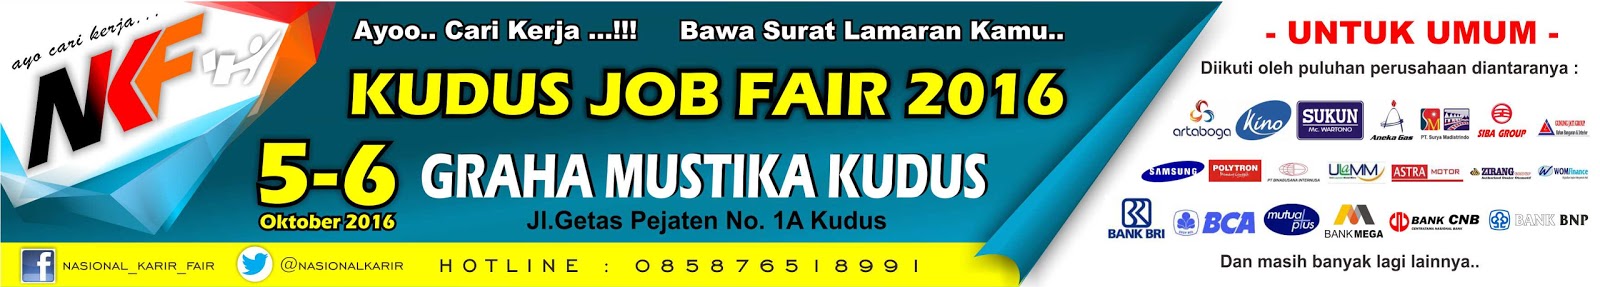 Nasional Karir Fair Kudus Job Fair 2016 Tanggal 5 - 6 